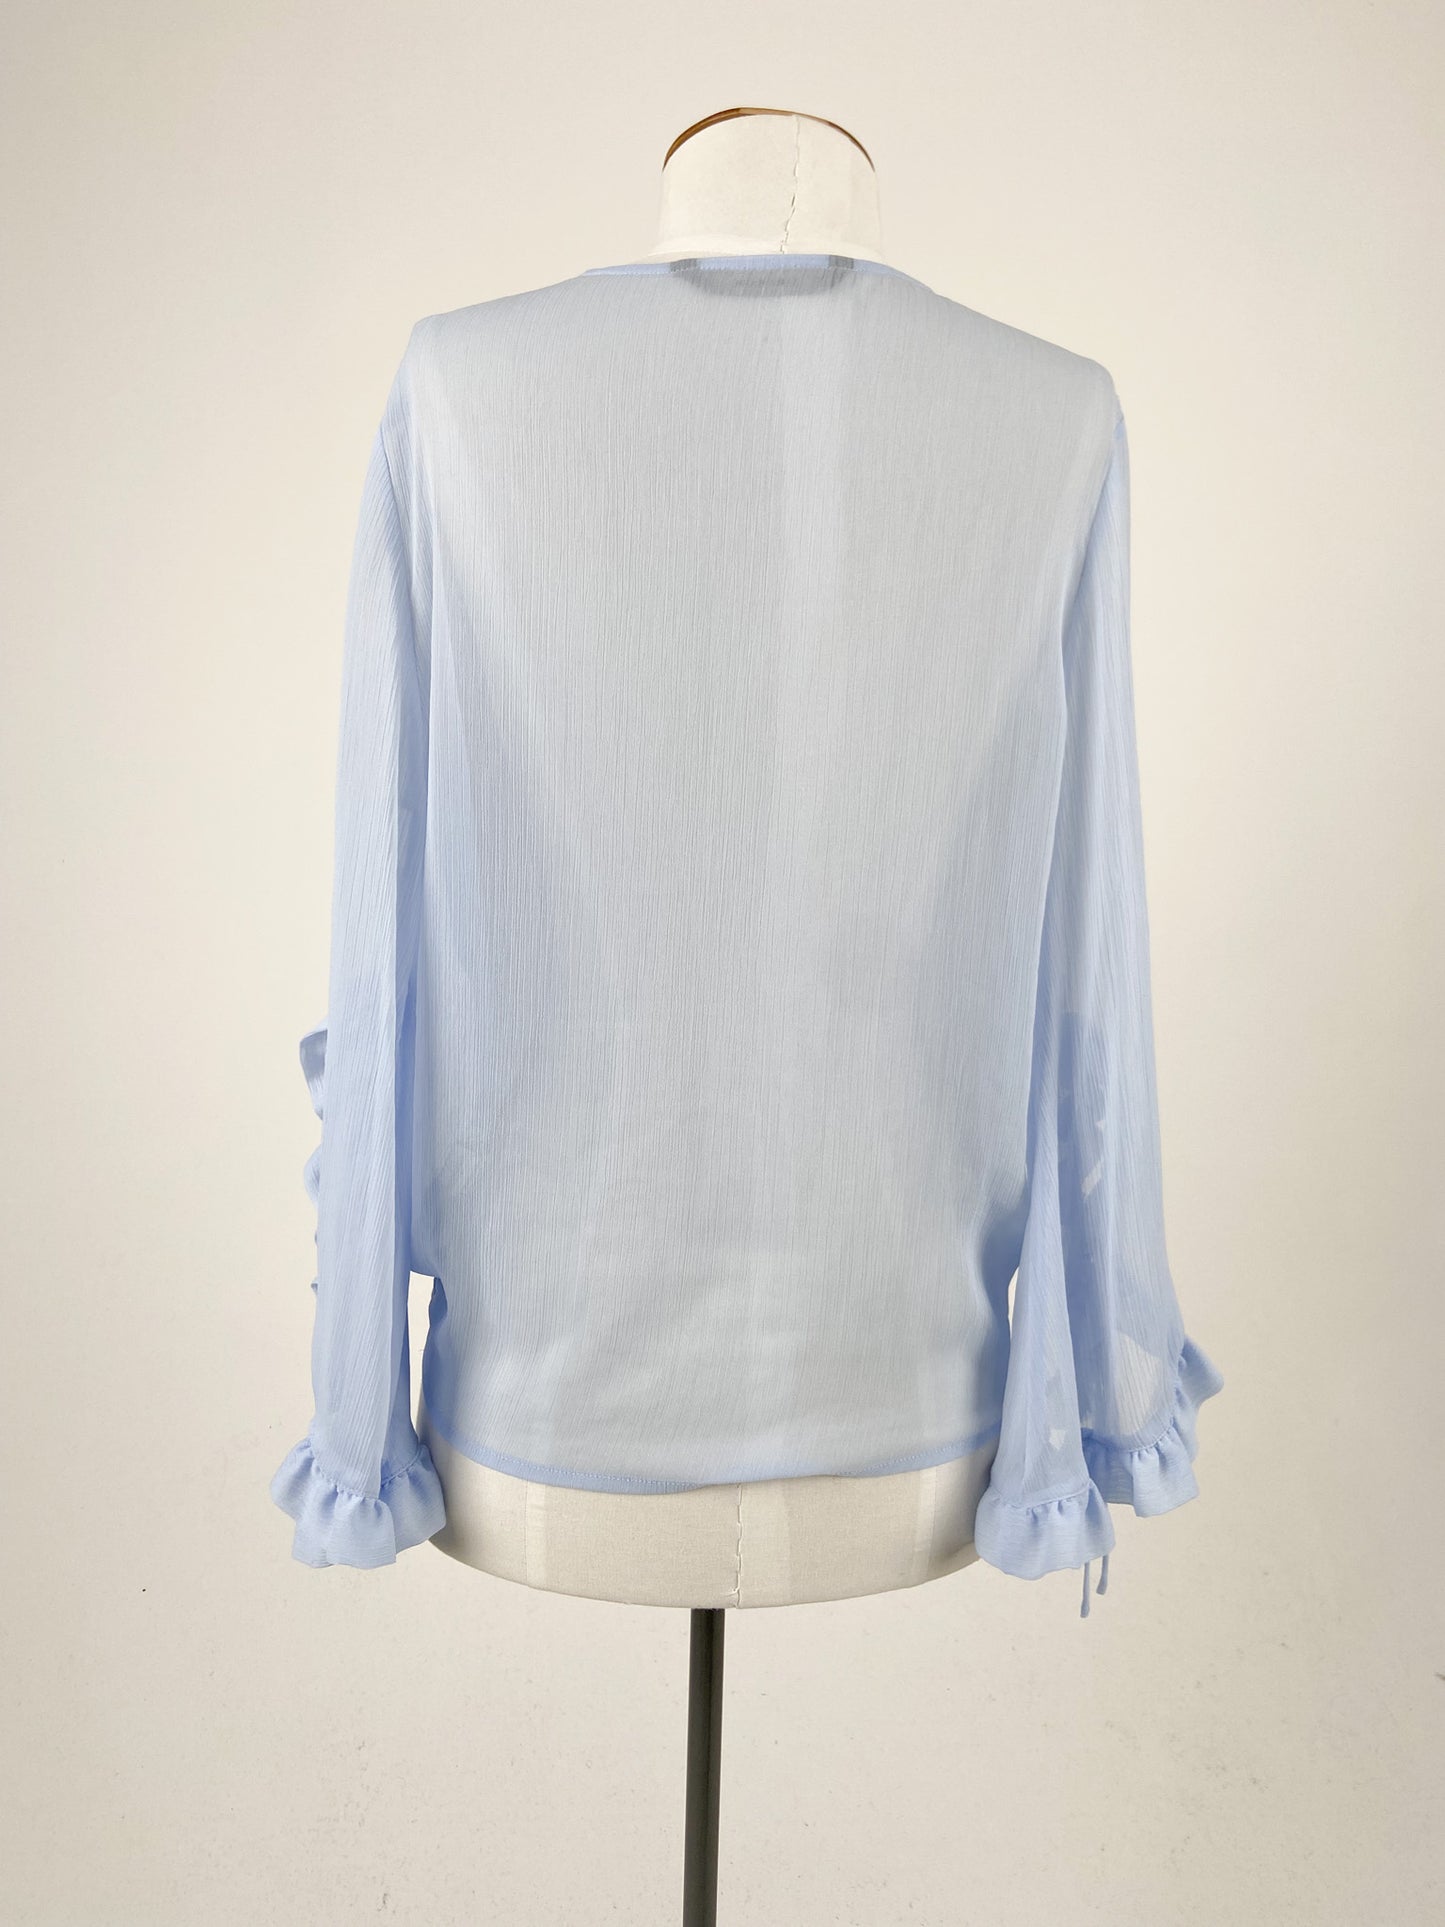 Zara | Blue Casual/Workwear Top | Size XS